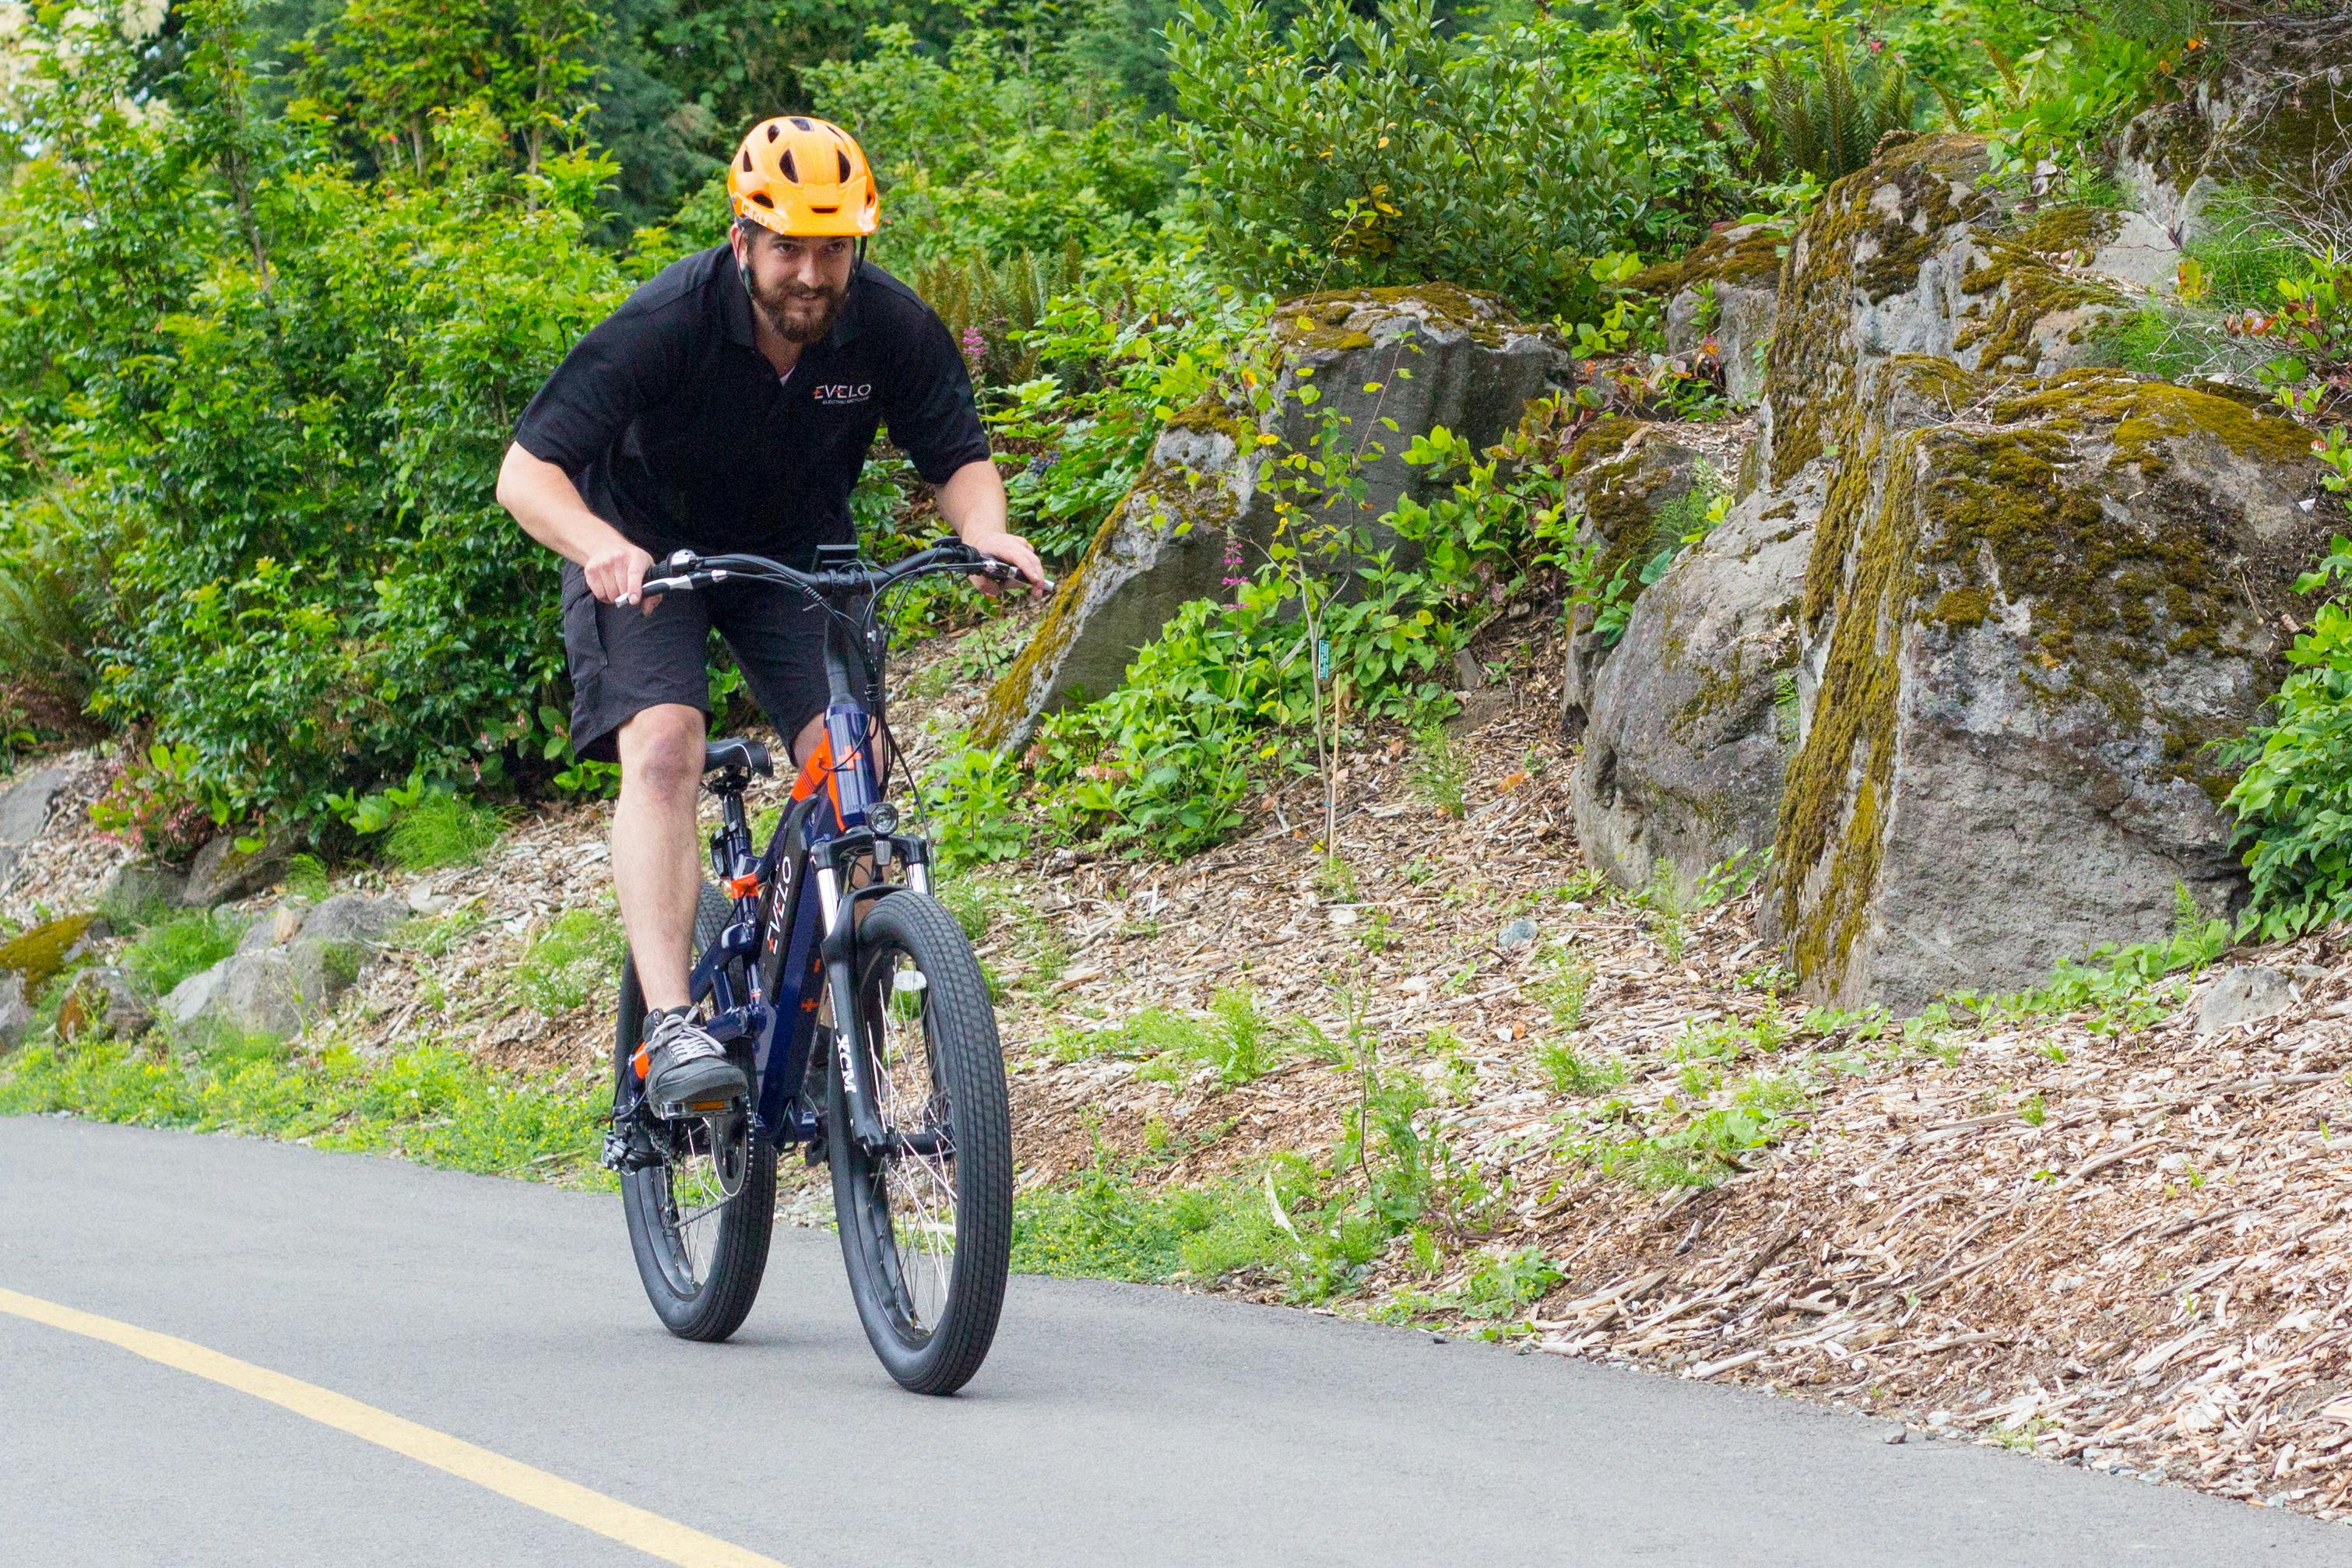 Foto de stock gratuita sobre bici, bicicleta, carretera, casco, ciclismo,  ciclista, equitación, hombre